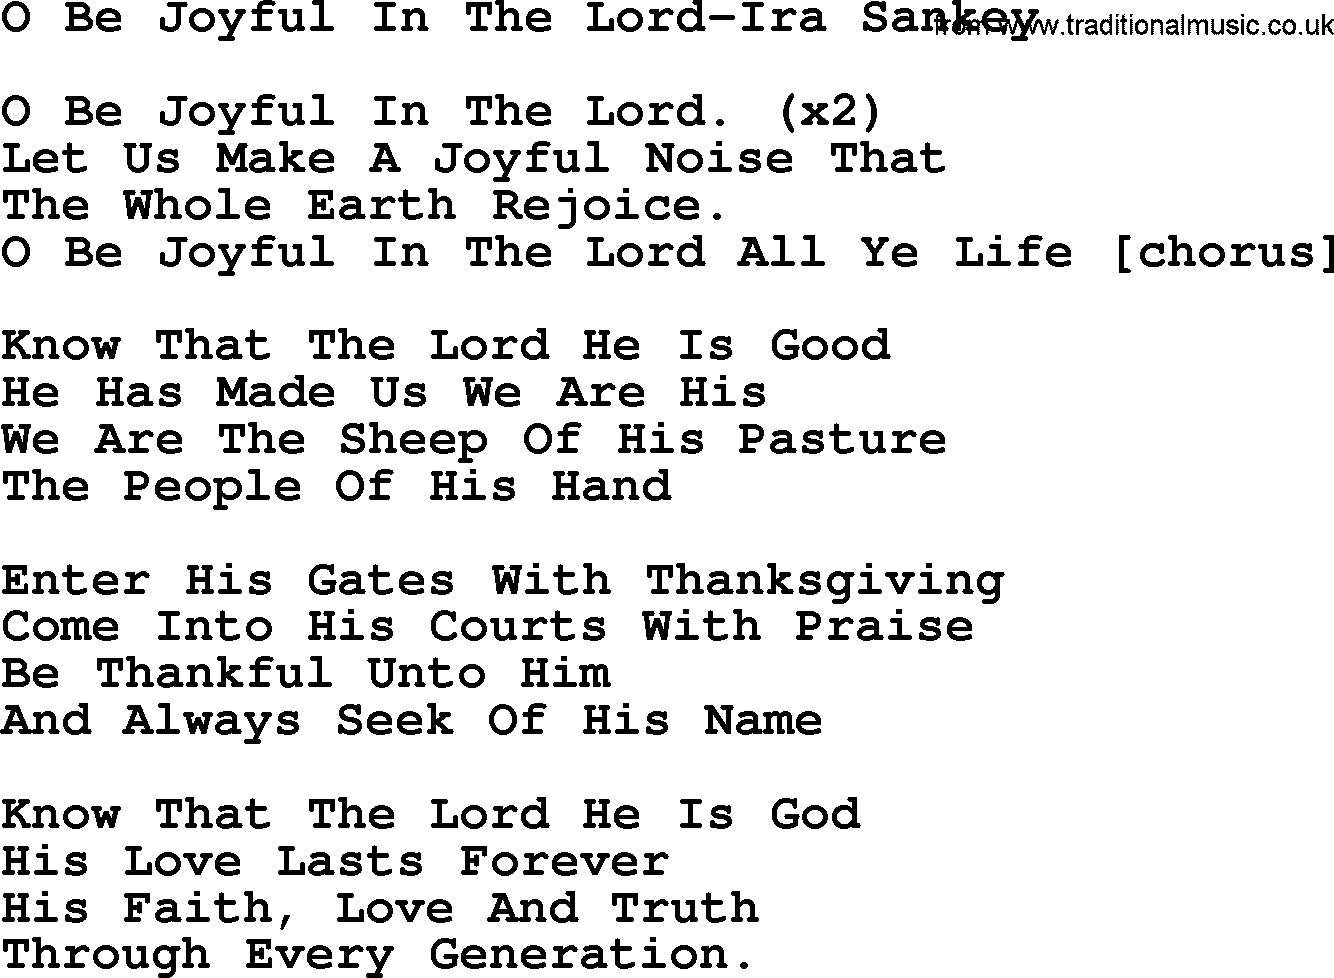 Ira Sankey hymn: O Be Joyful In The Lord-Ira Sankey, lyrics